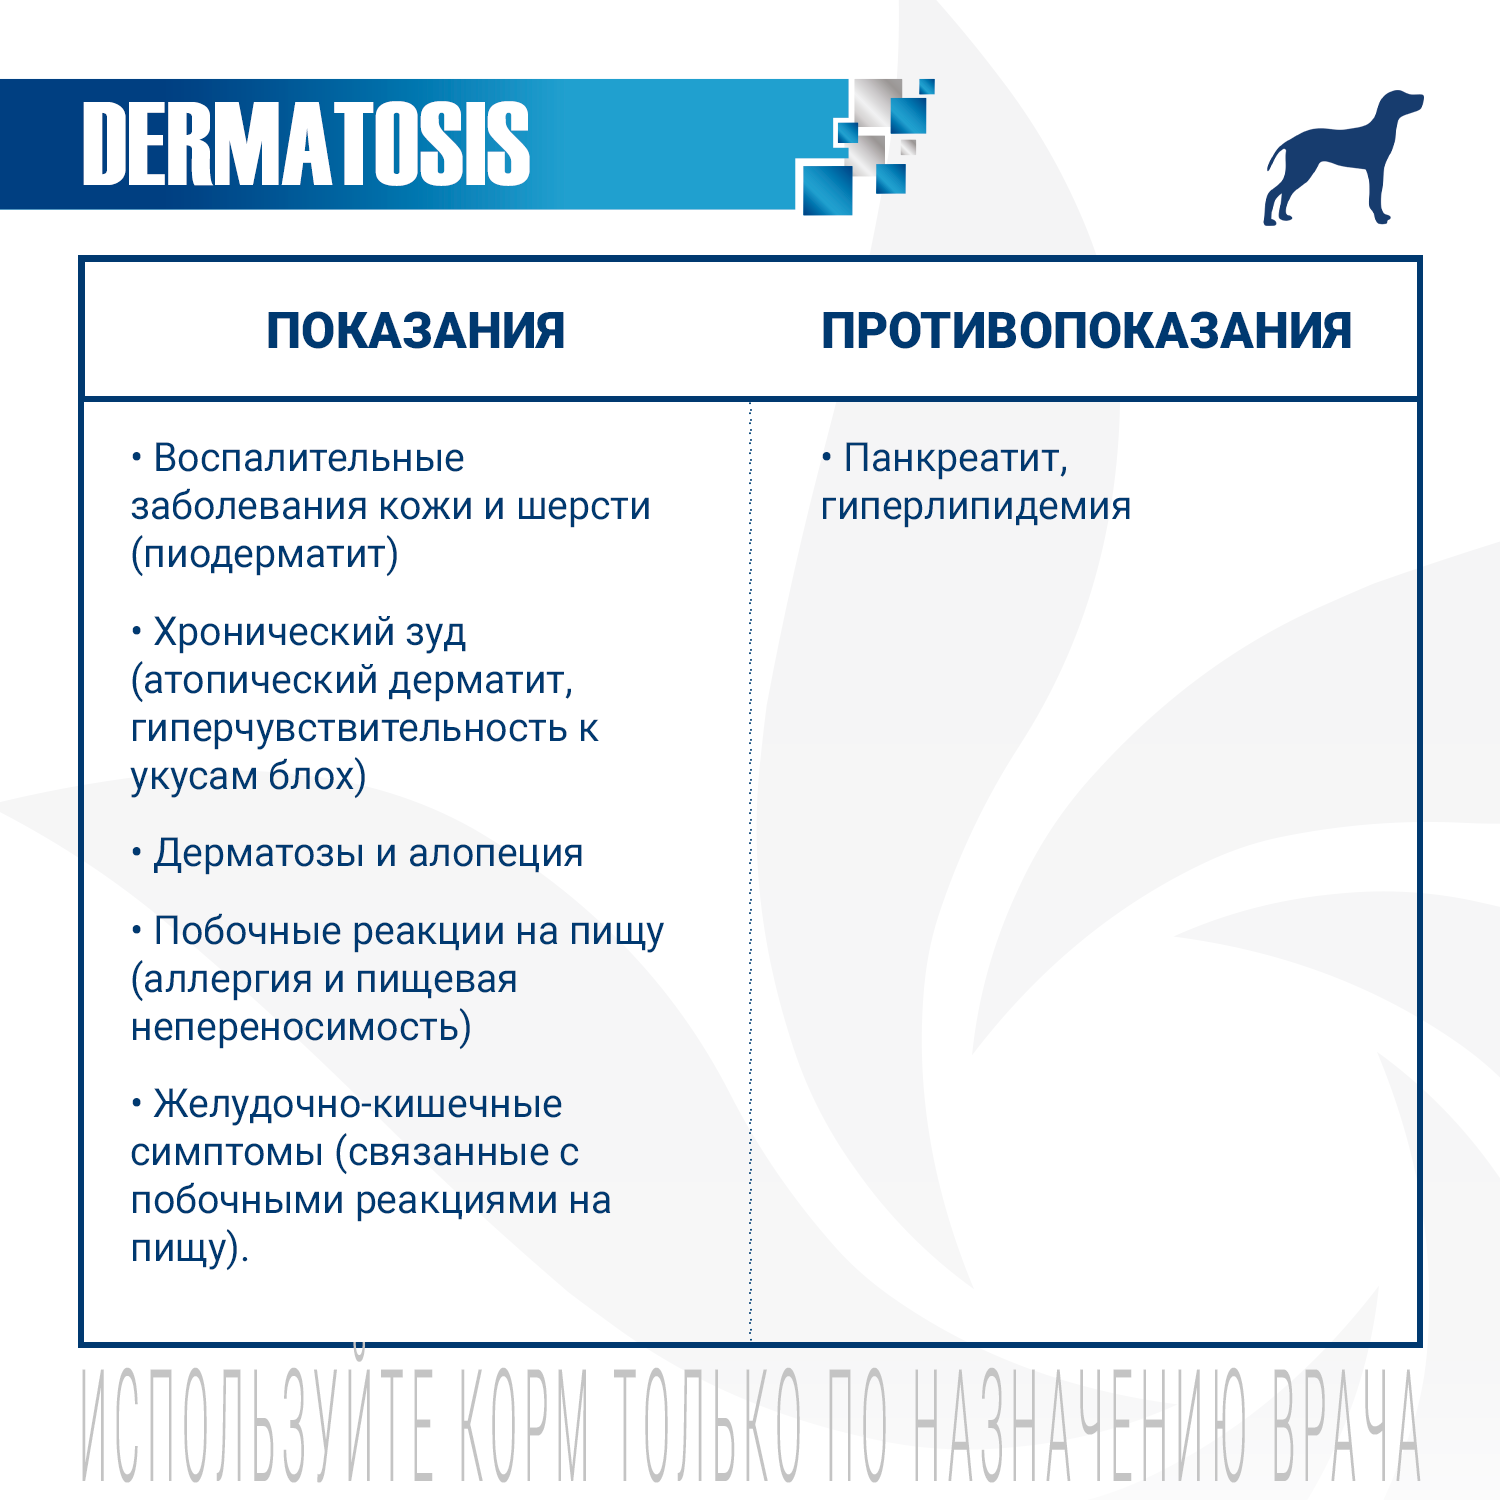 Monge VetSolution Dog Dermatosis диета для собак Дерматозис 2 кг